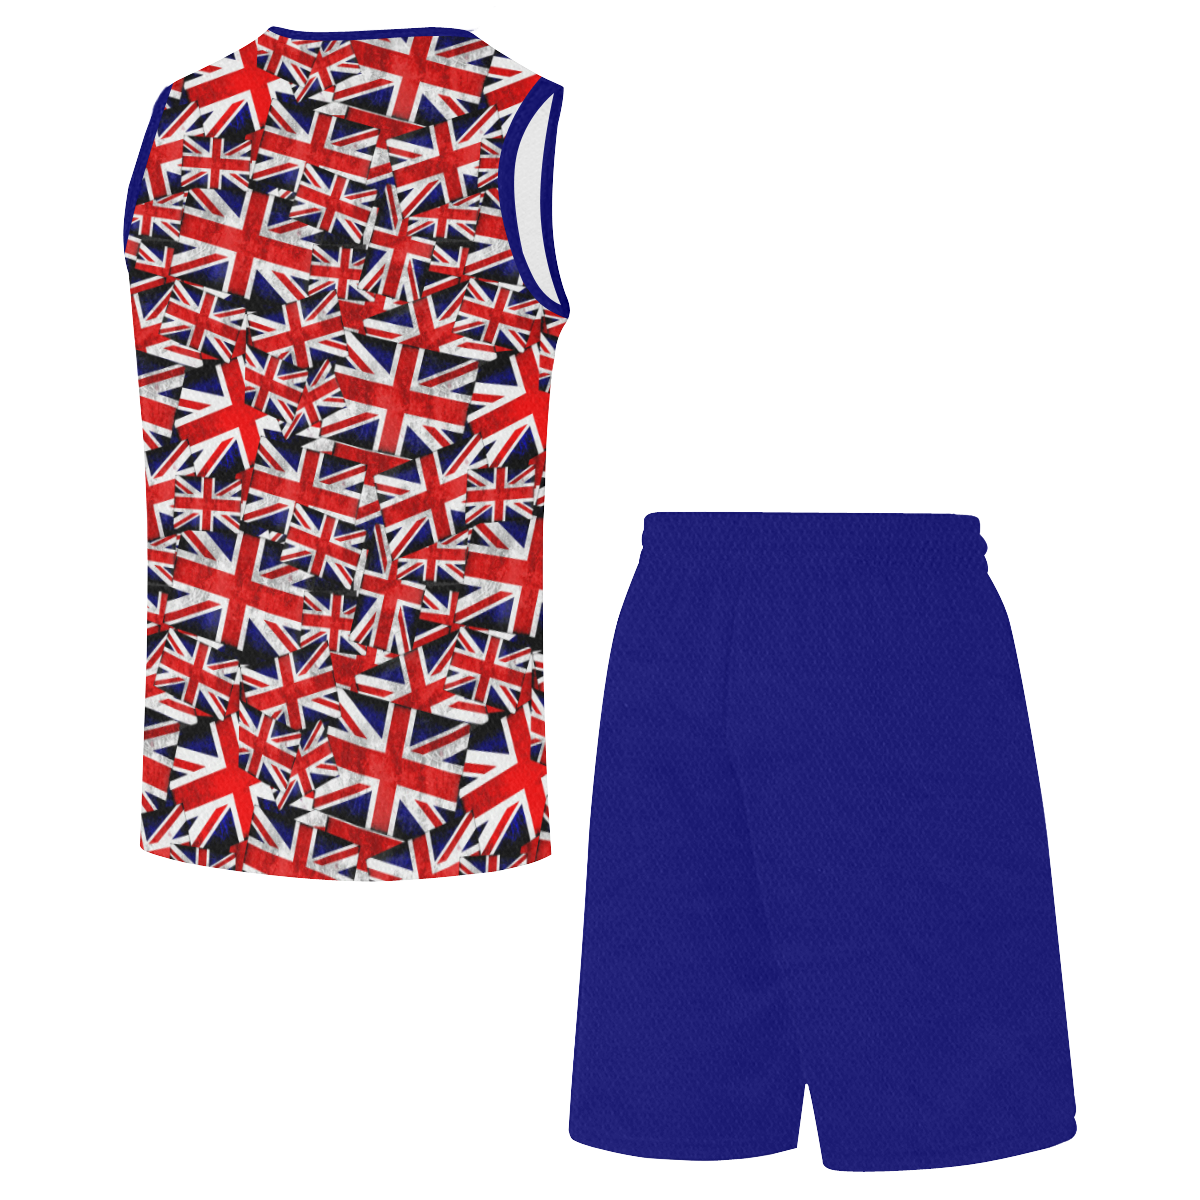 Union Jack British UK Flag Blue All Over Print Basketball Uniform